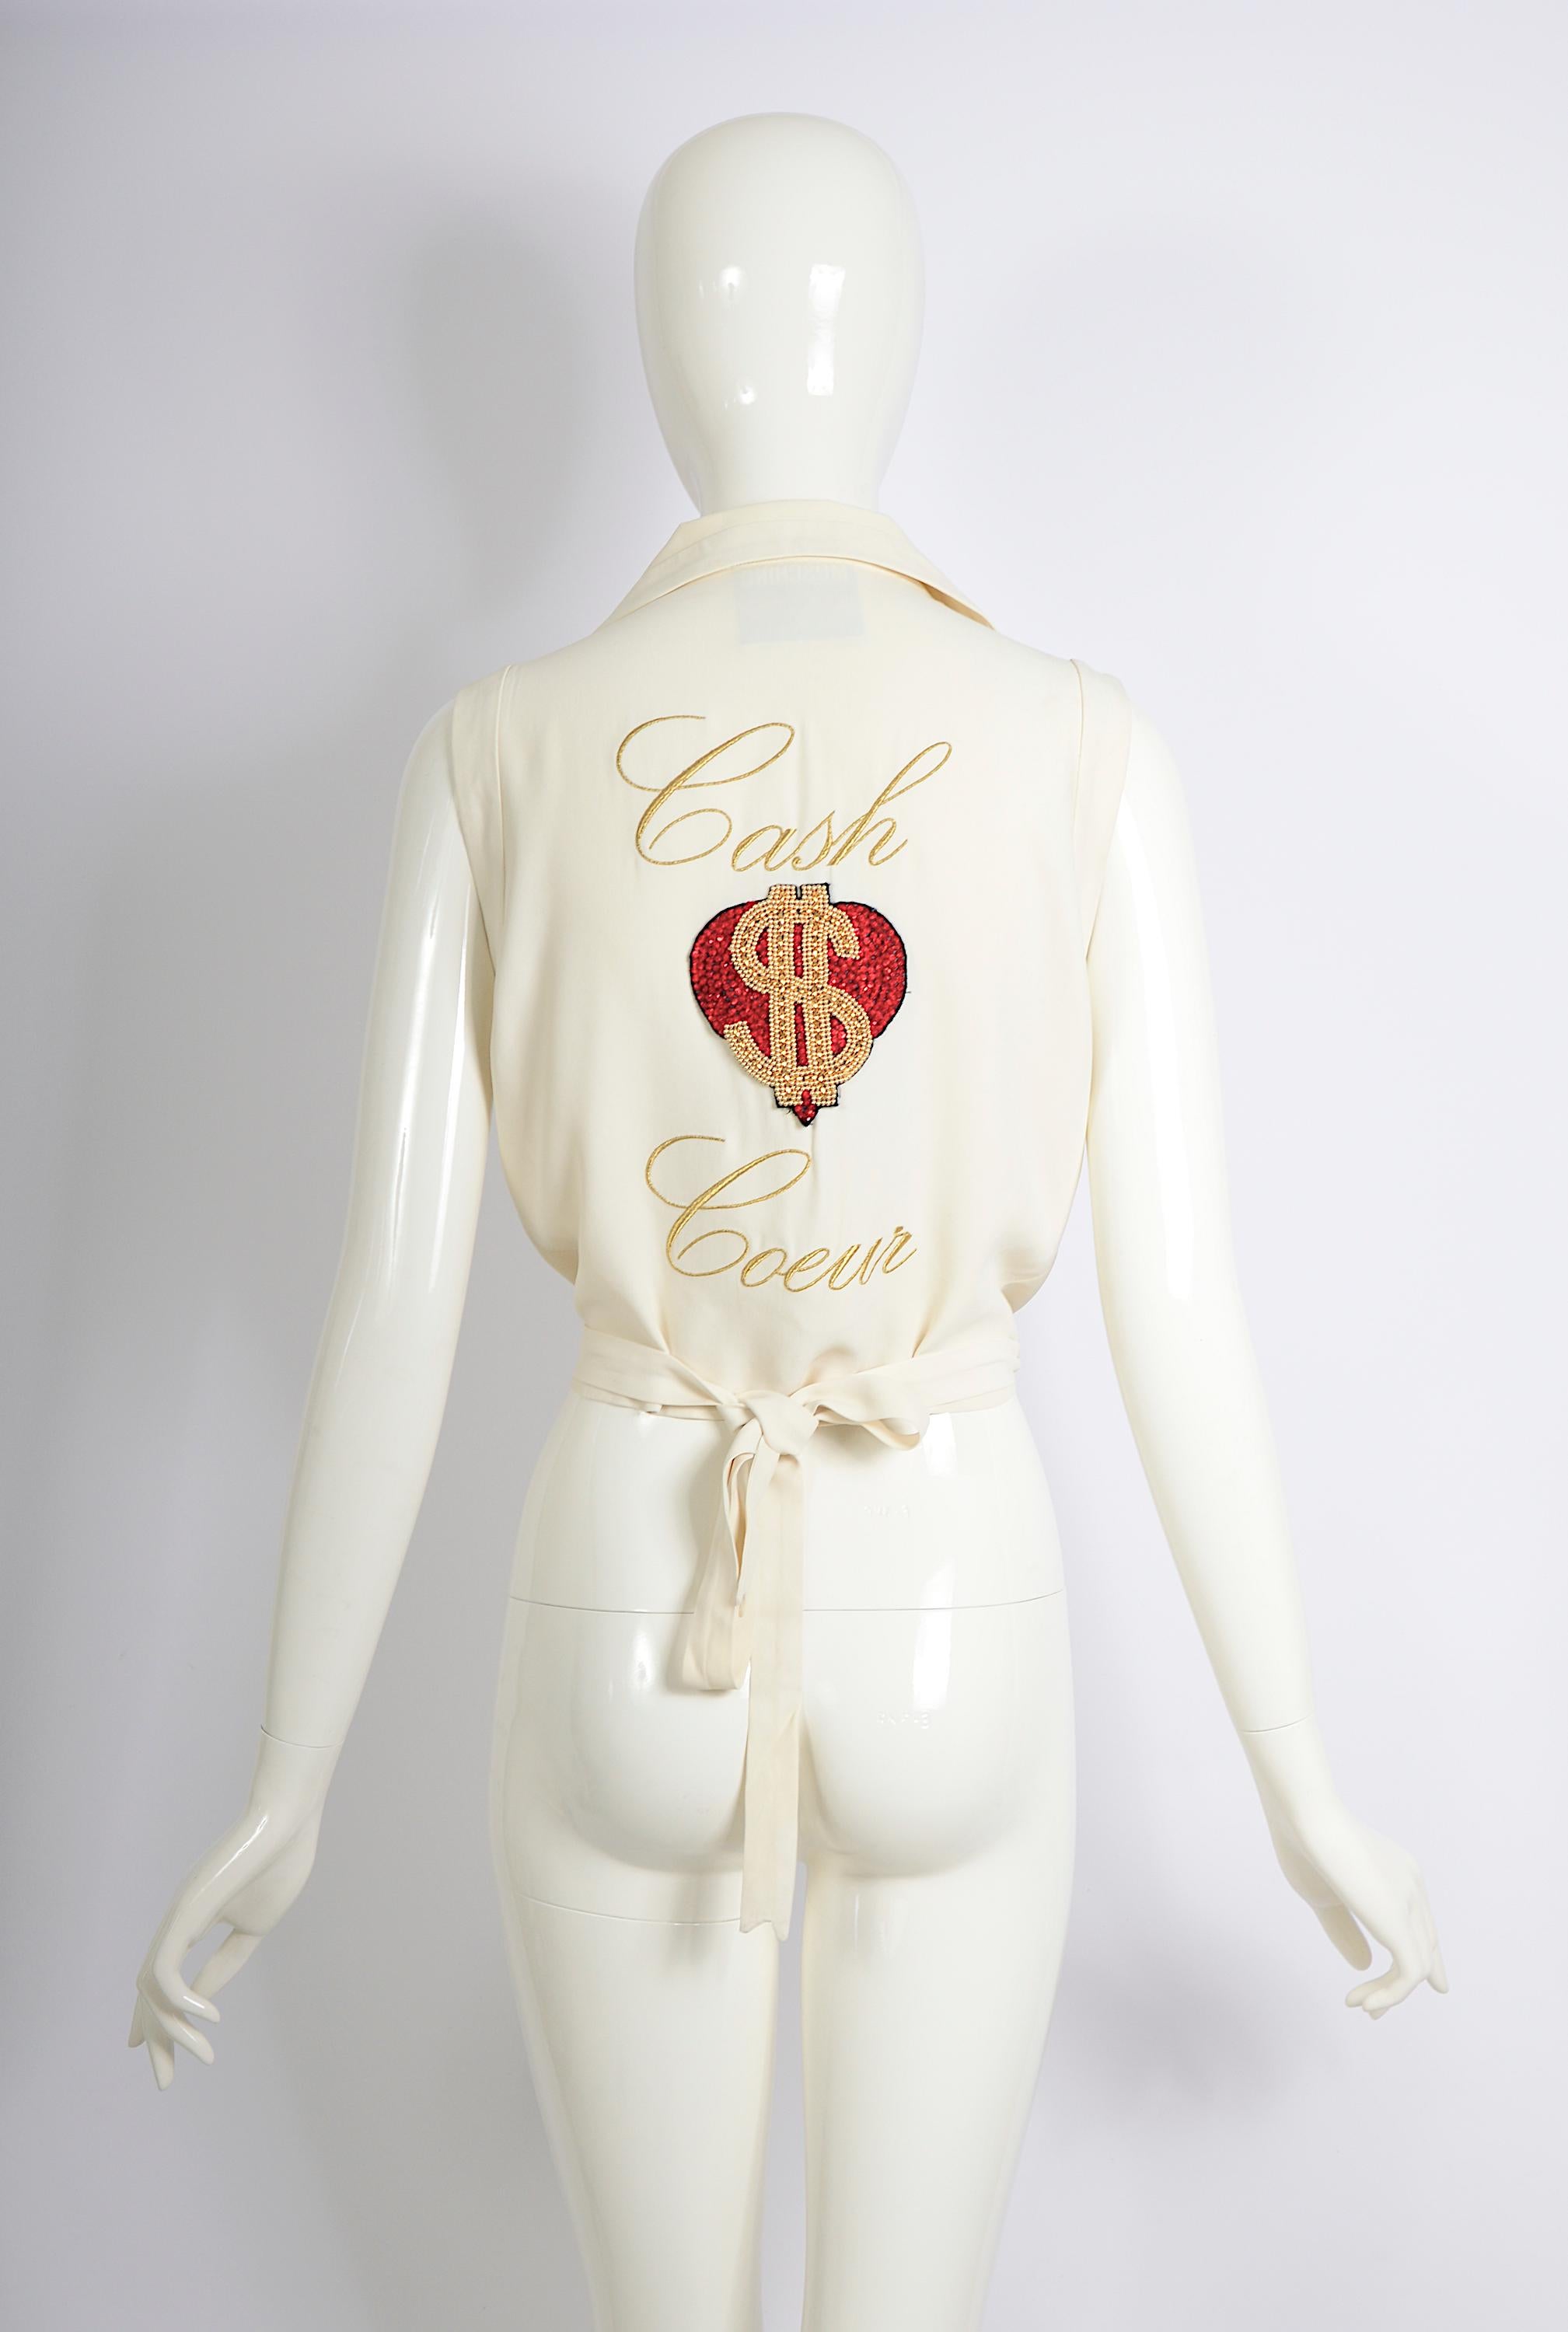  Moschino Couture collectionneur de collection vintage embelli « Cash coeur » crème en vente 3